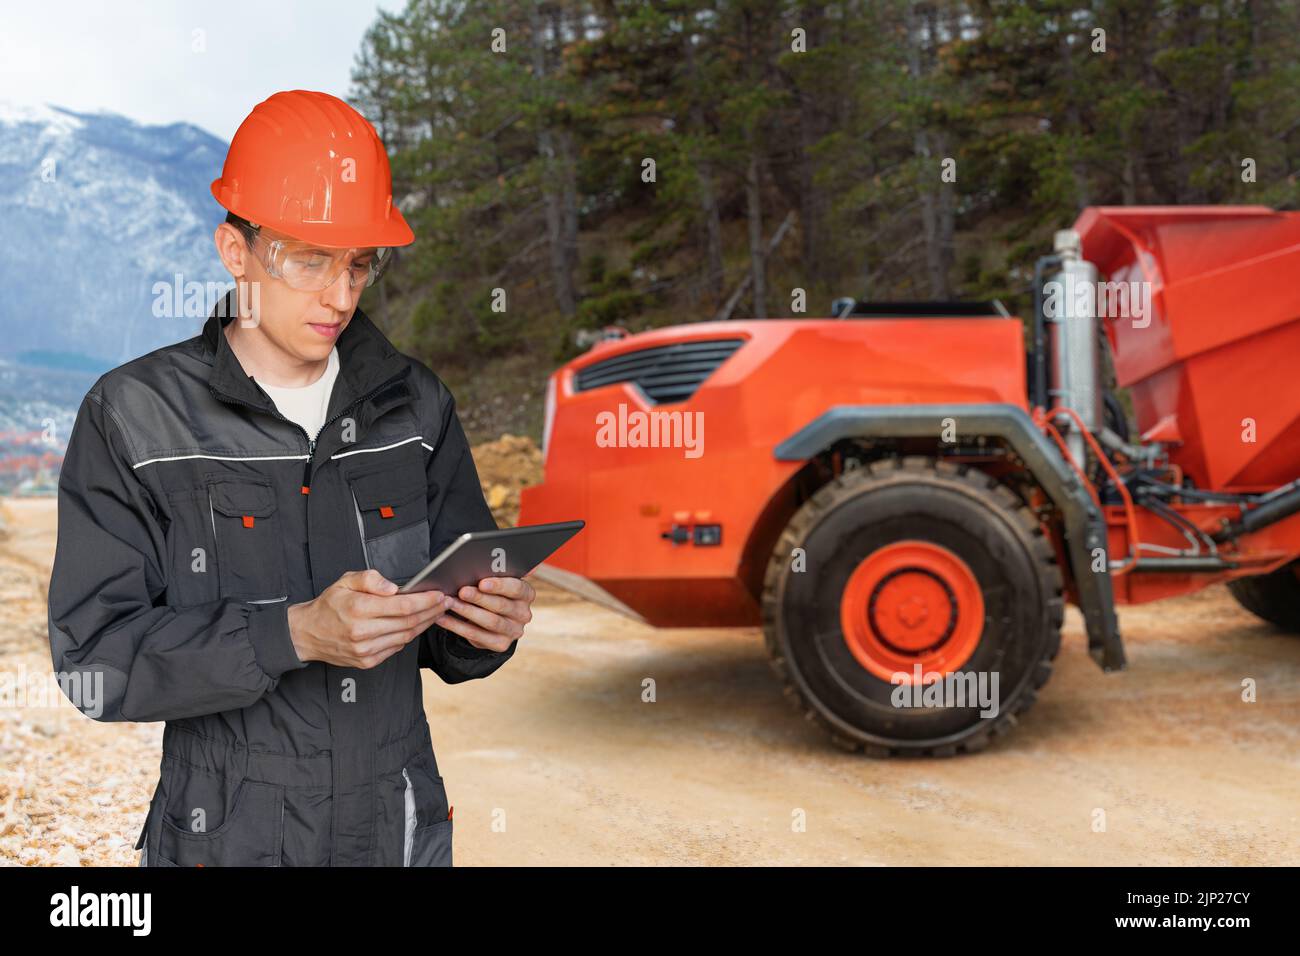 Engineer programs autonomous mining truck using digital tablet Stock Photo